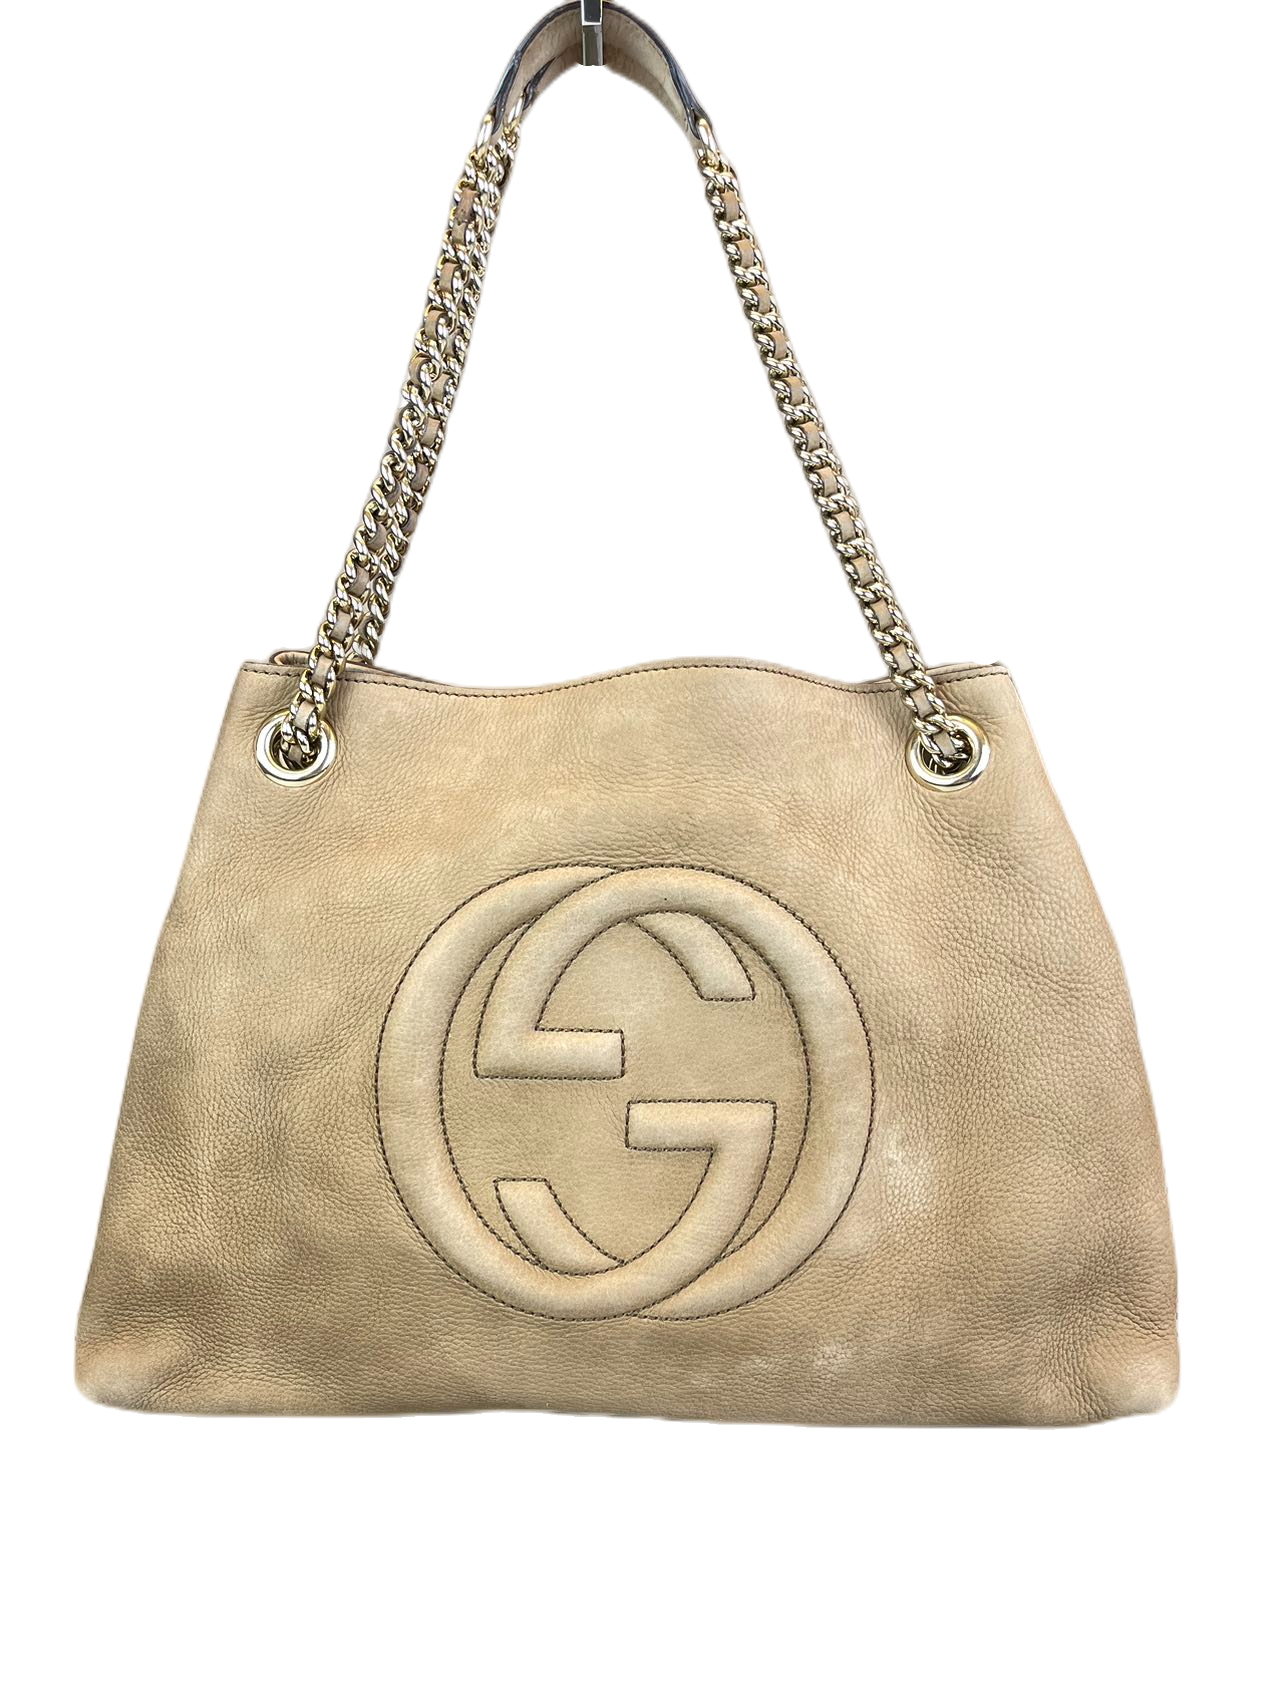 Preloved Gucci GG Logo SoHo Chain Totes Shoulder Bag